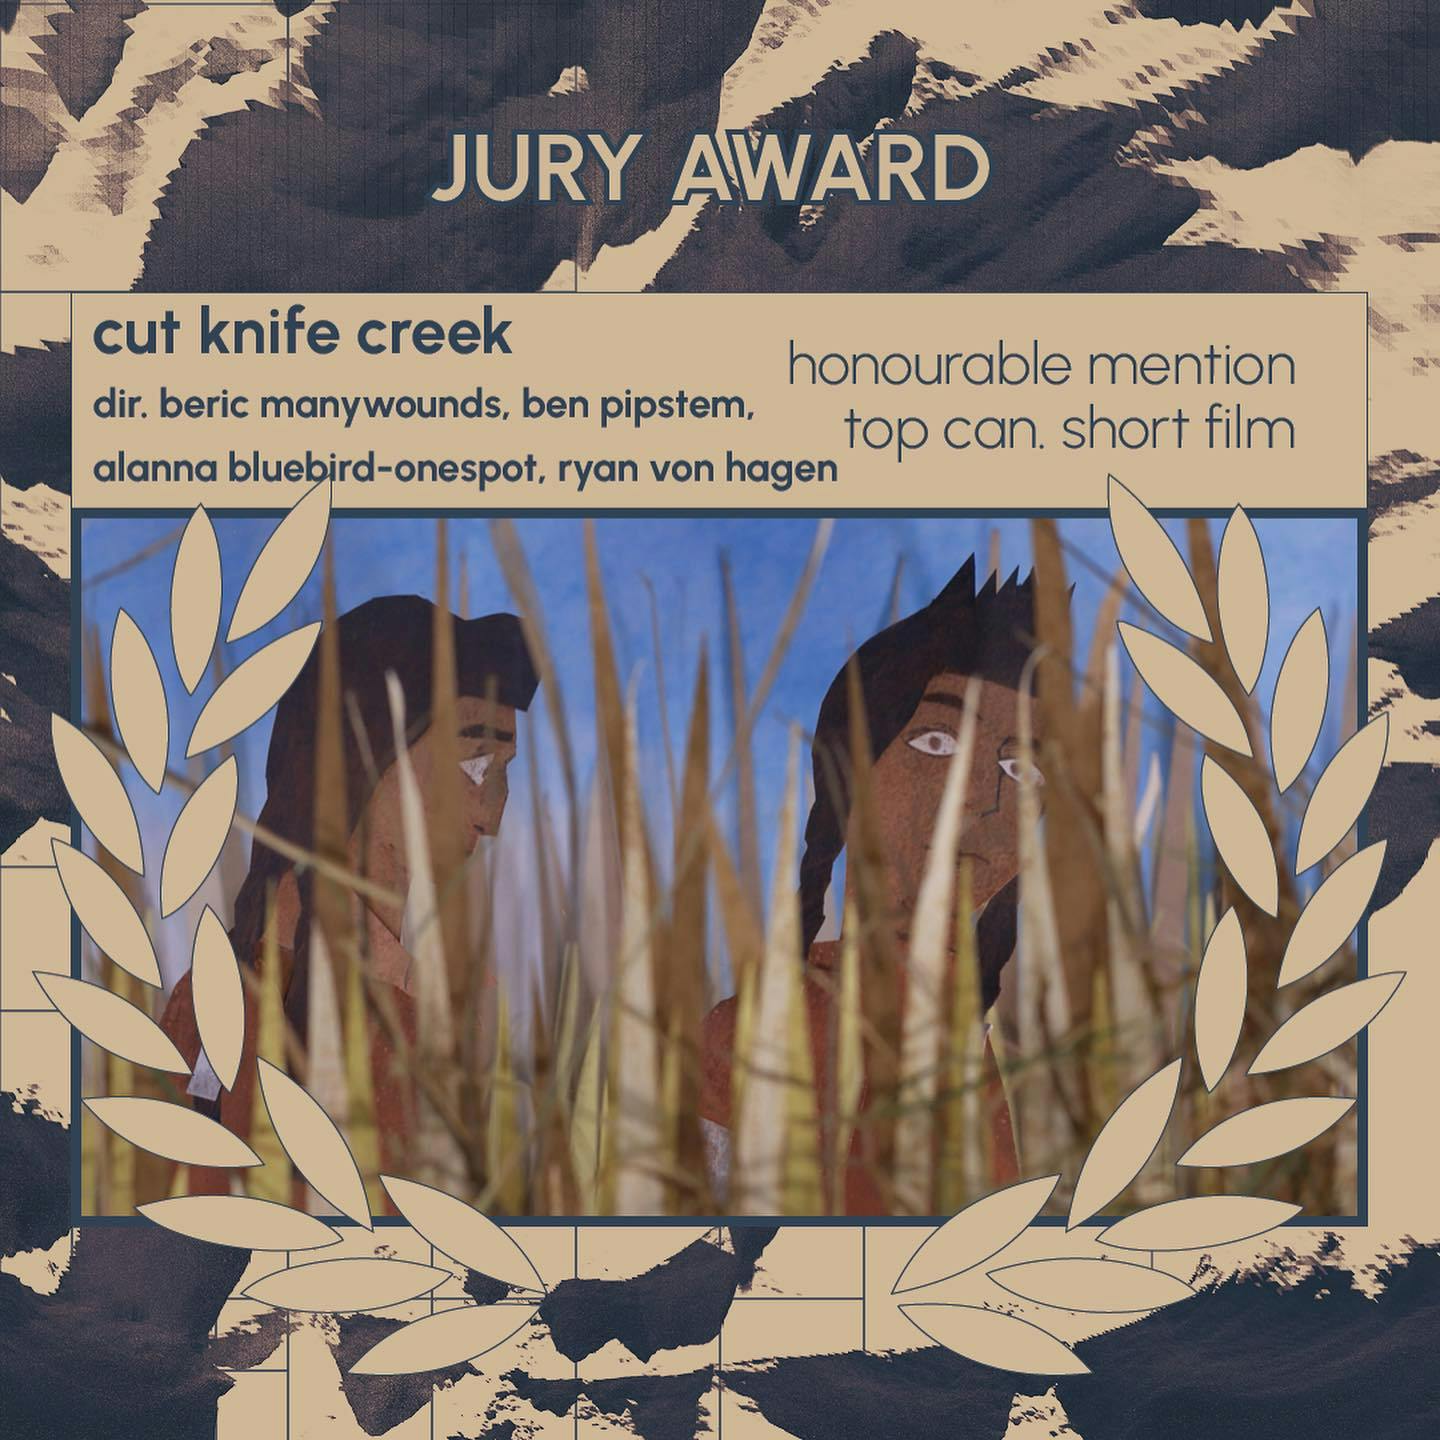 JURY AWARD for GIRAF19
honourable mention top can. short film

cut knife creek
dir. beric manywounds, ben pipstem, alanna bluebord-onespot, ryan von hagen